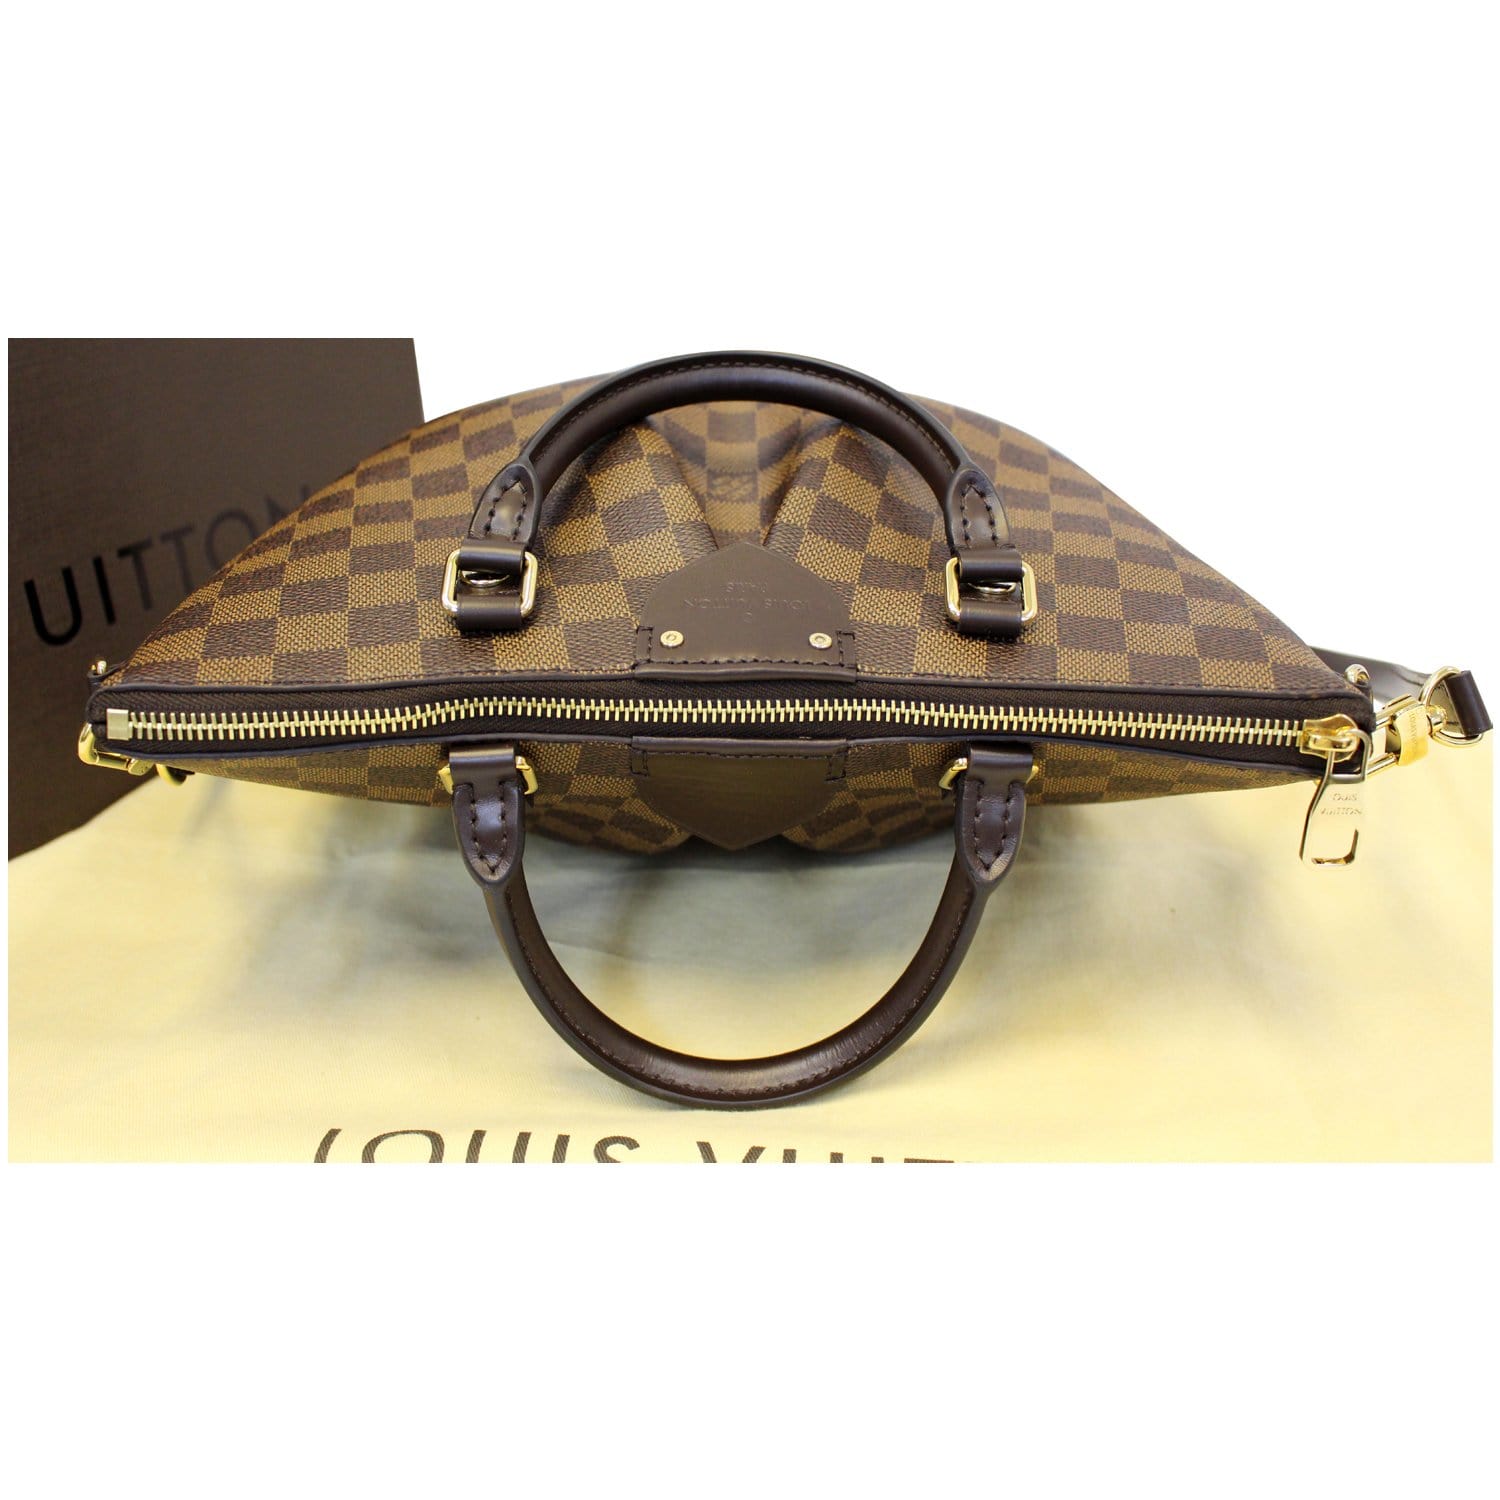 Louis Vuitton Siena Handbag Damier PM Brown 2316121